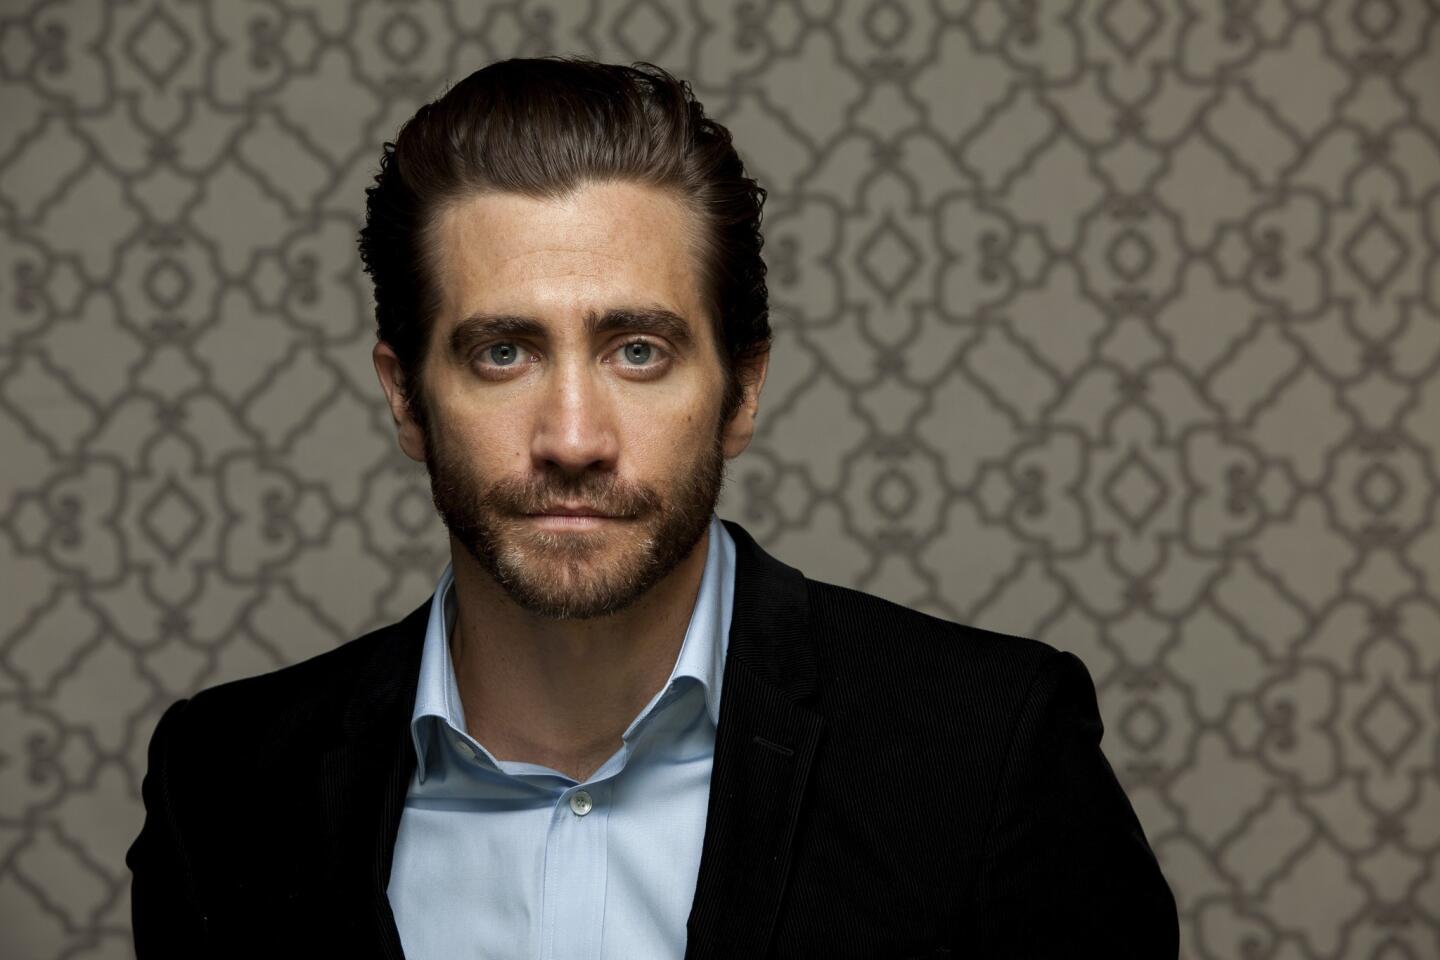 Jake Gyllenhaal wearing a black suit